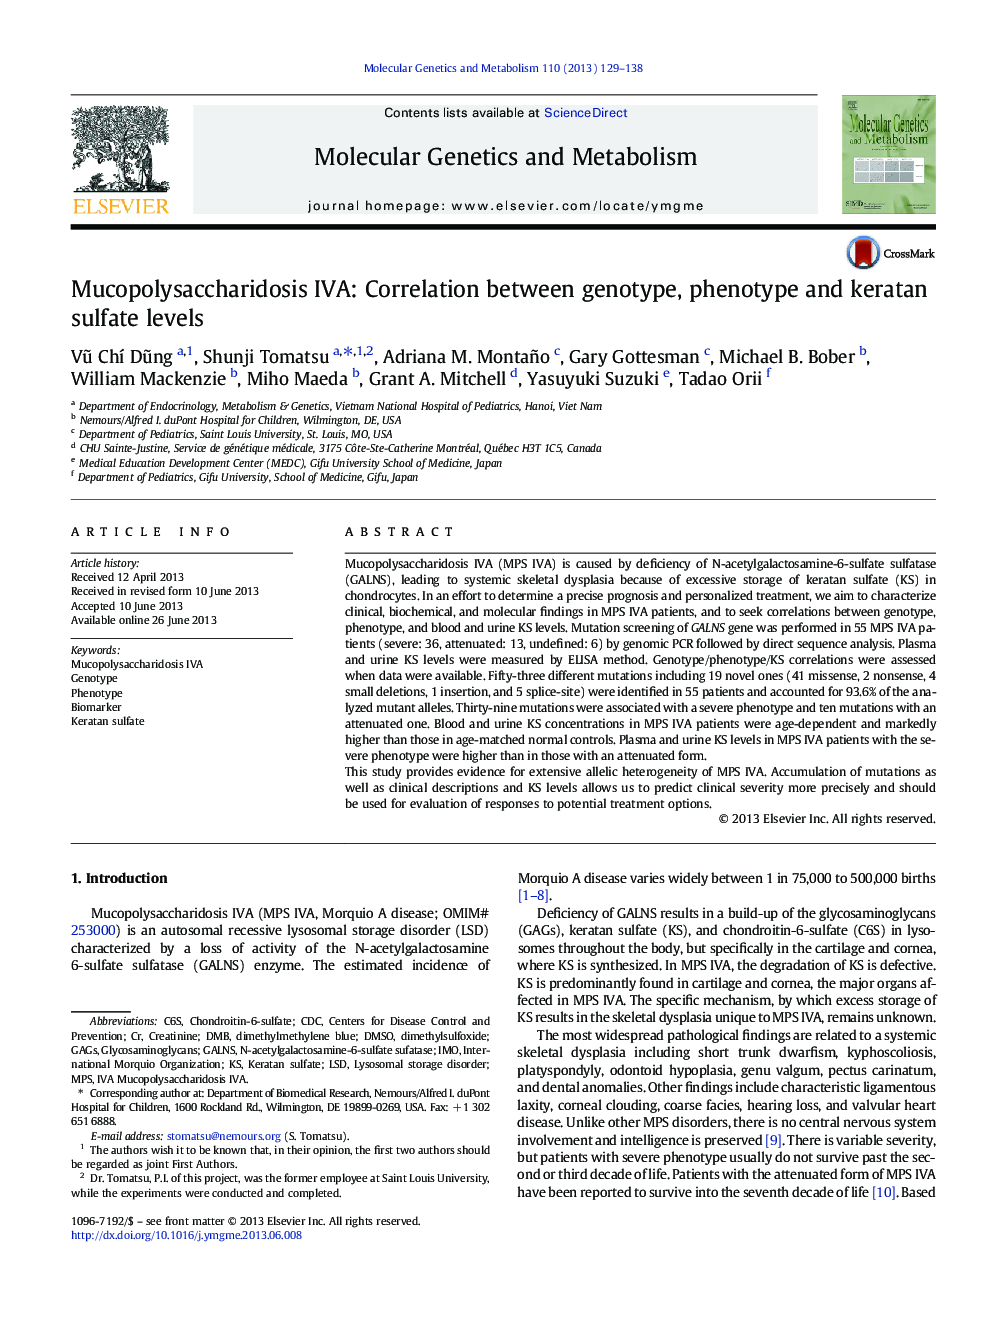 Mucopolysaccharidosis IVA: Correlation between genotype, phenotype and keratan sulfate levels